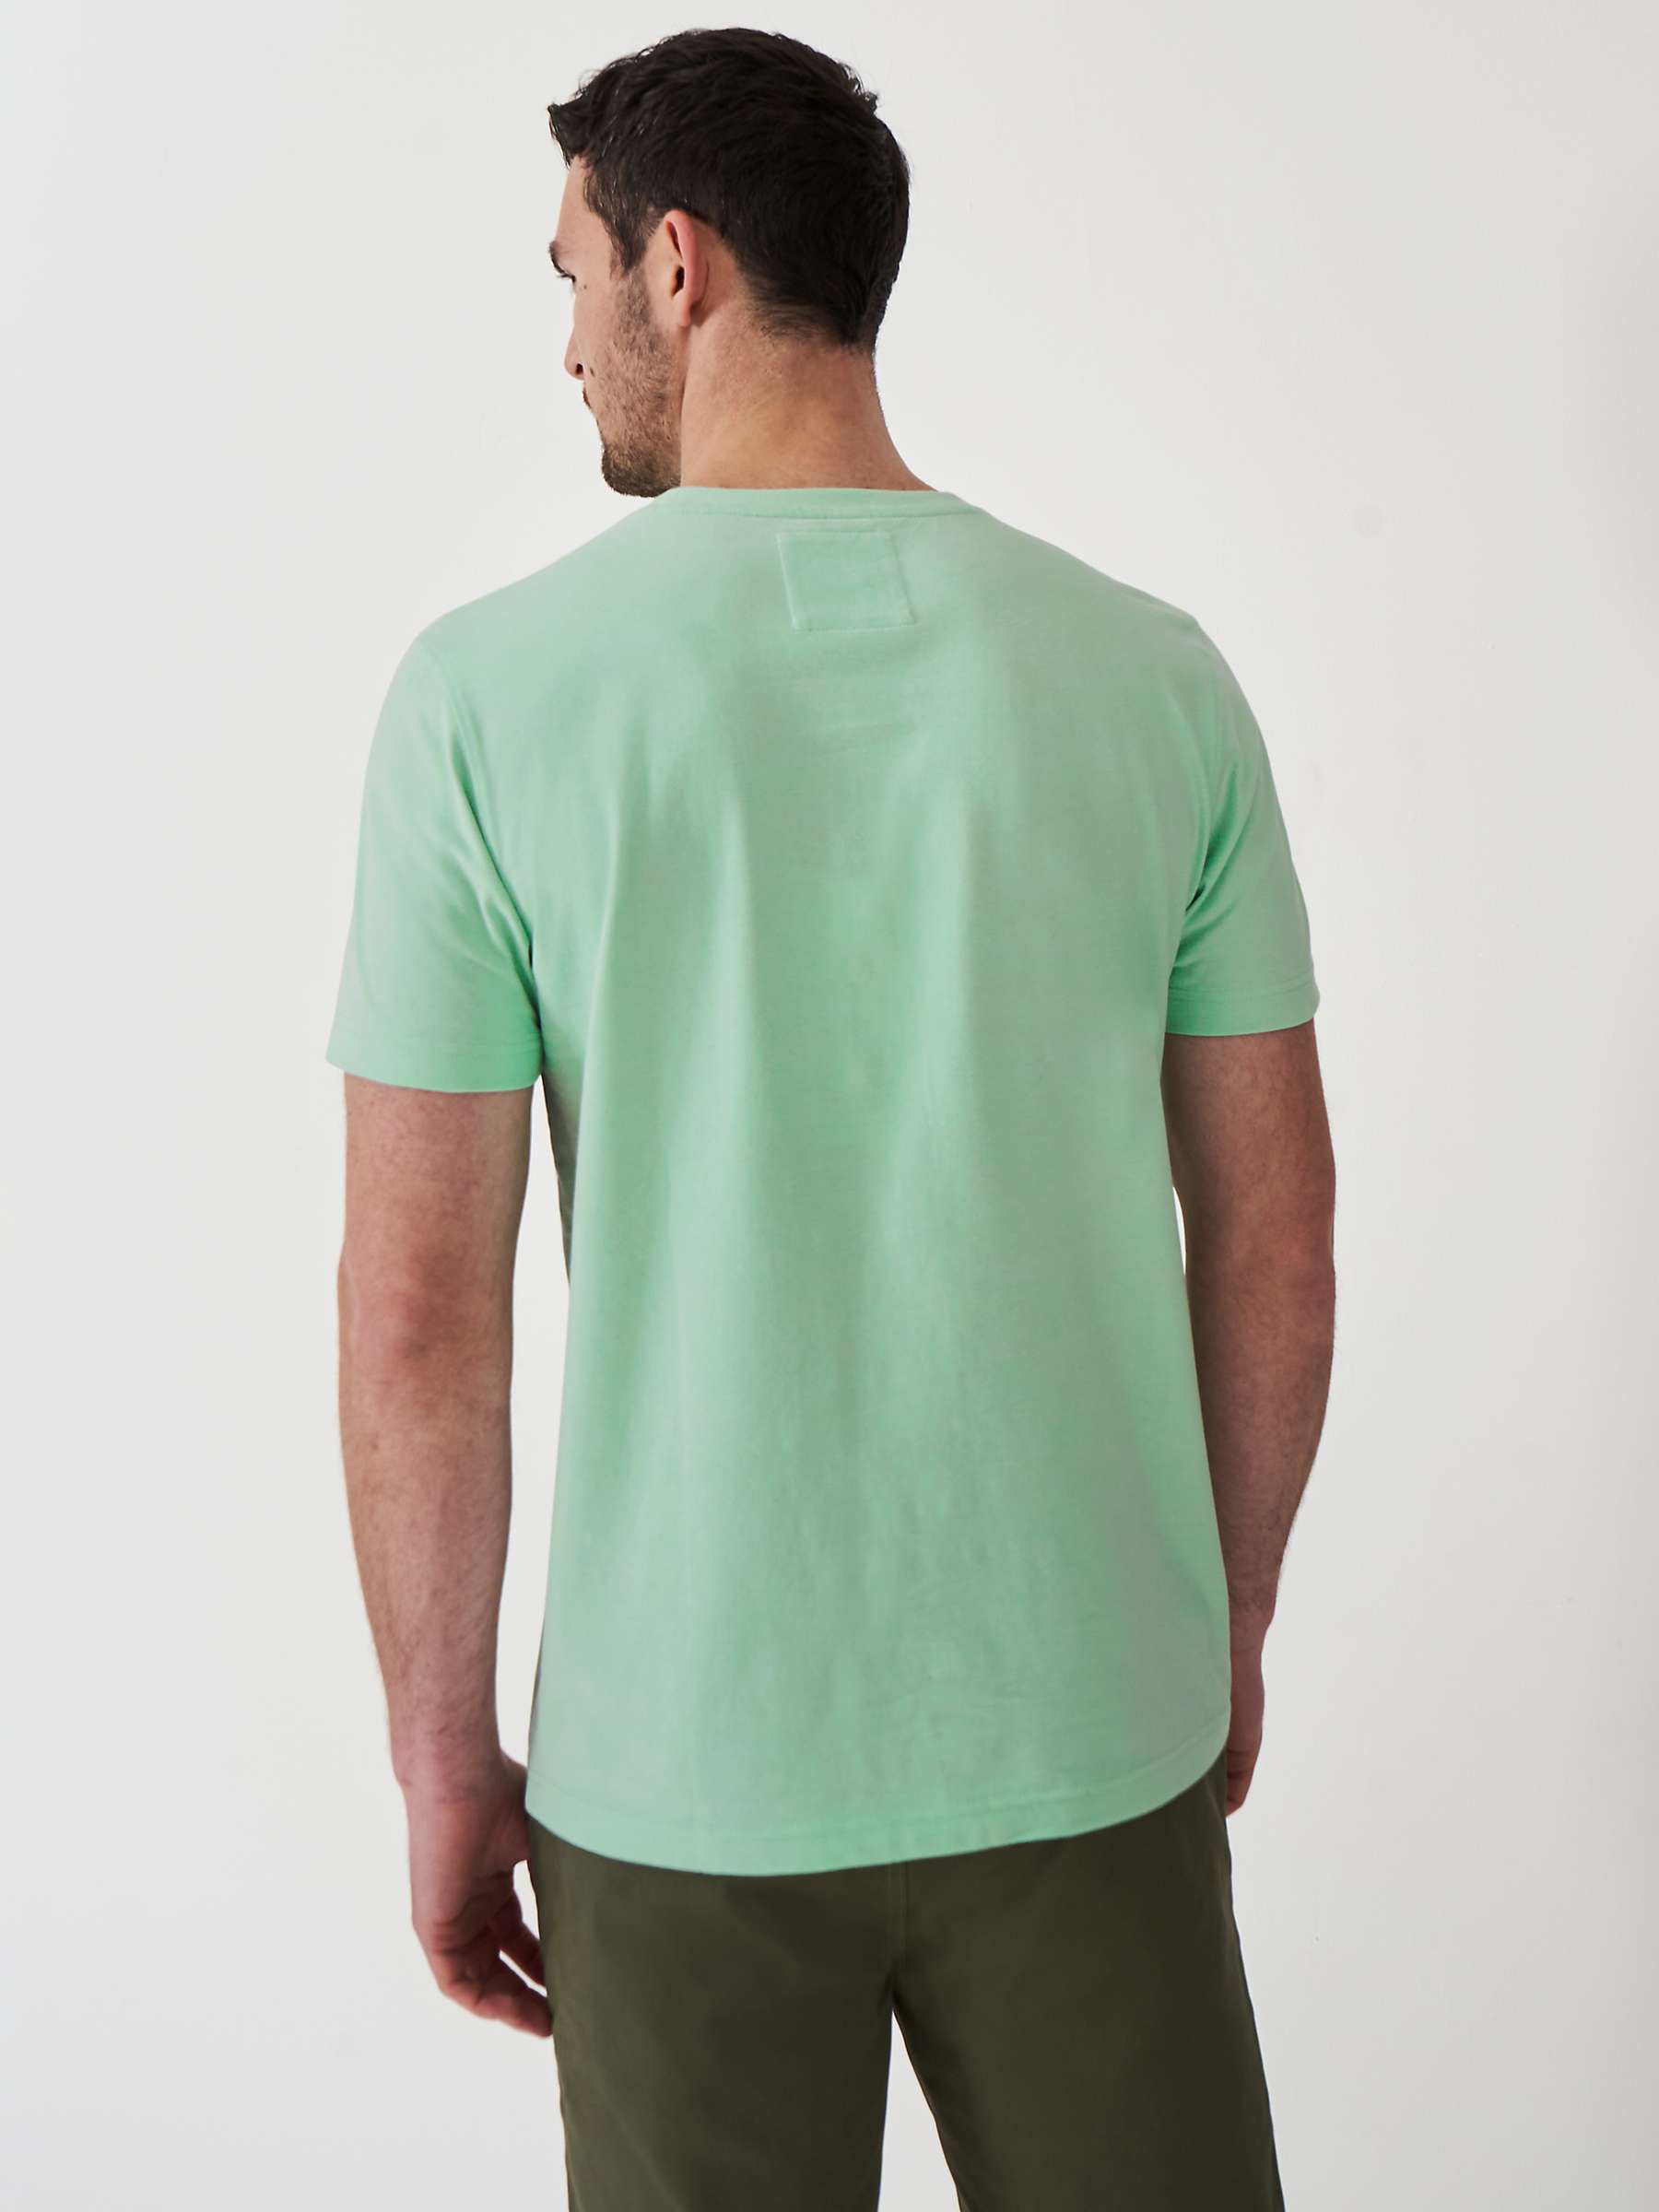 Buy Crew Clothing Crew Neck T-Shirt Online at johnlewis.com